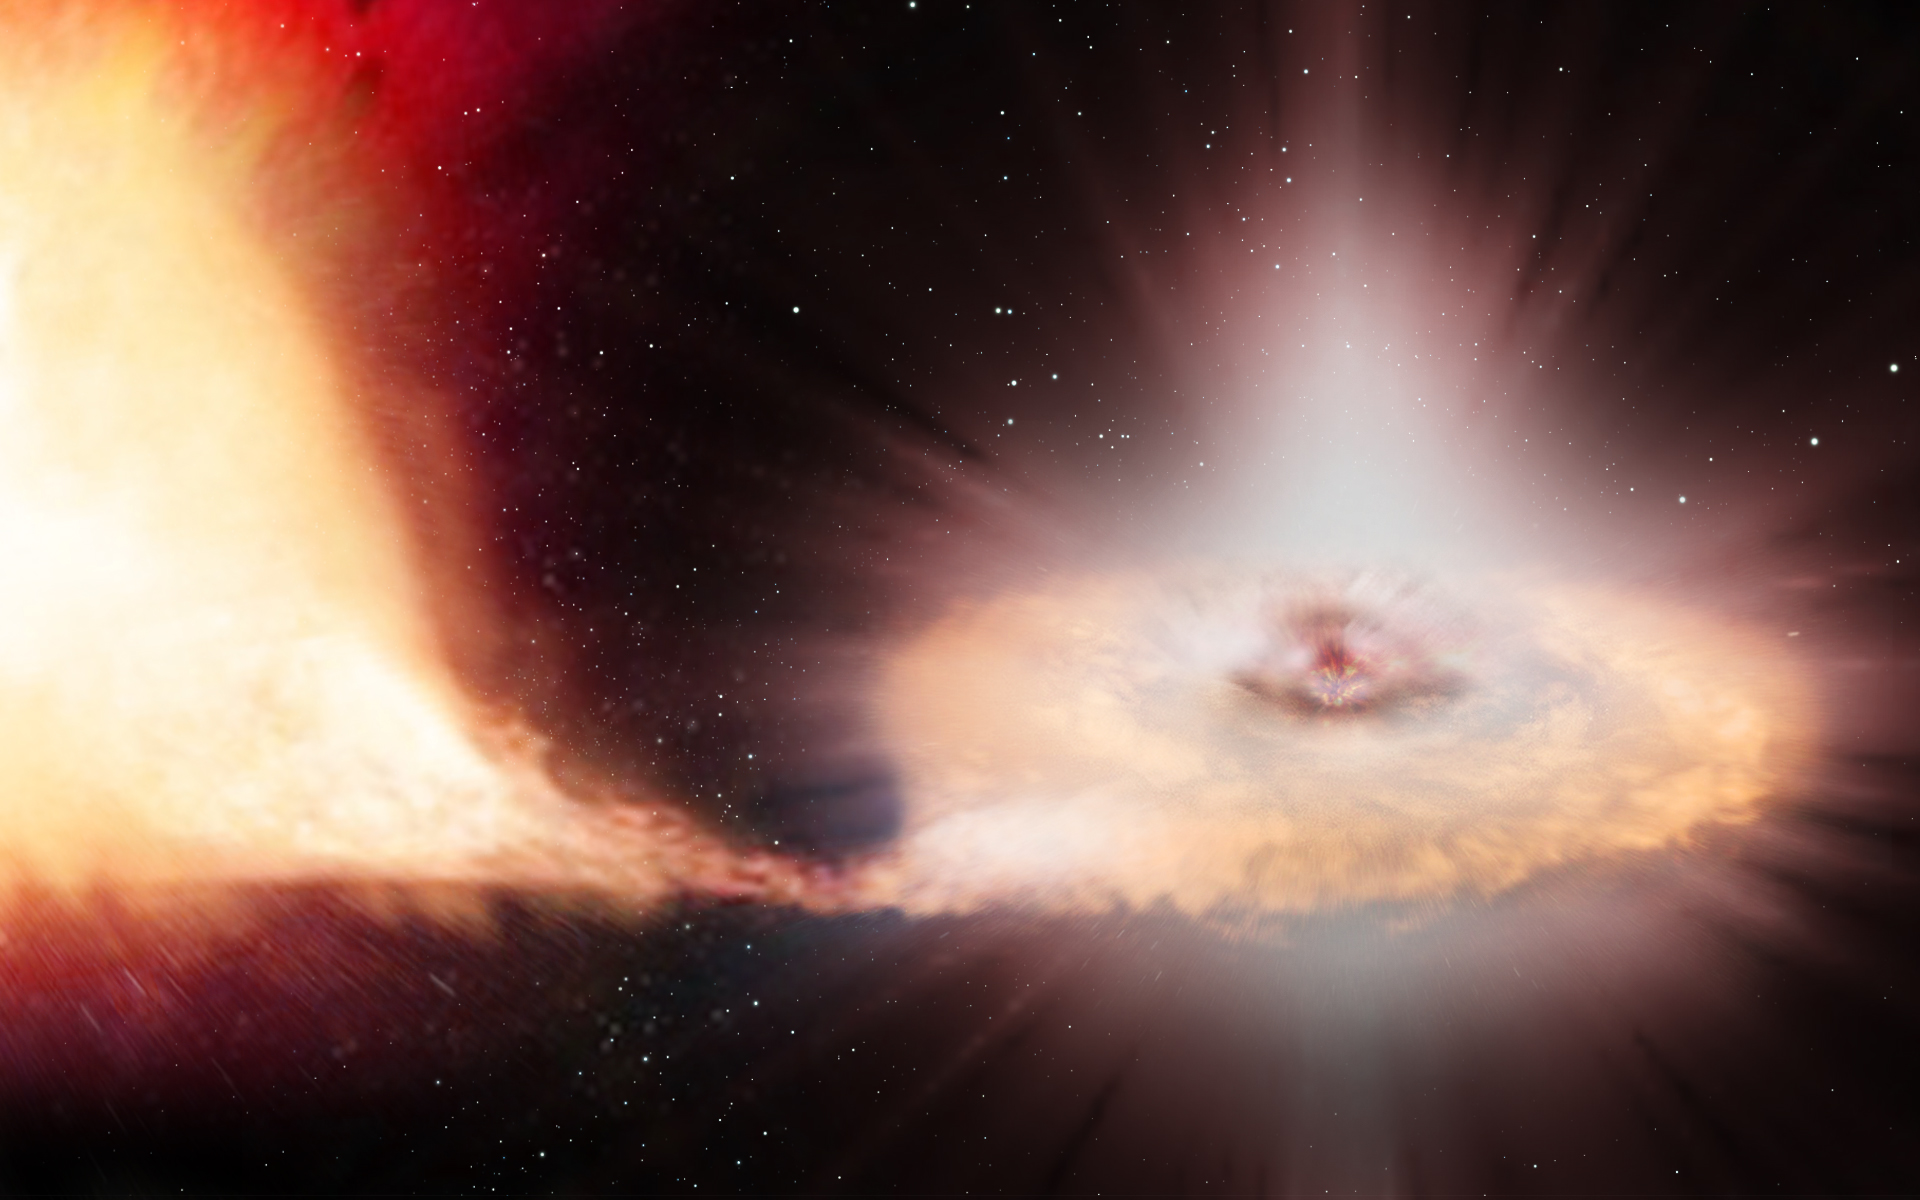 Gaia discovers its first supernova